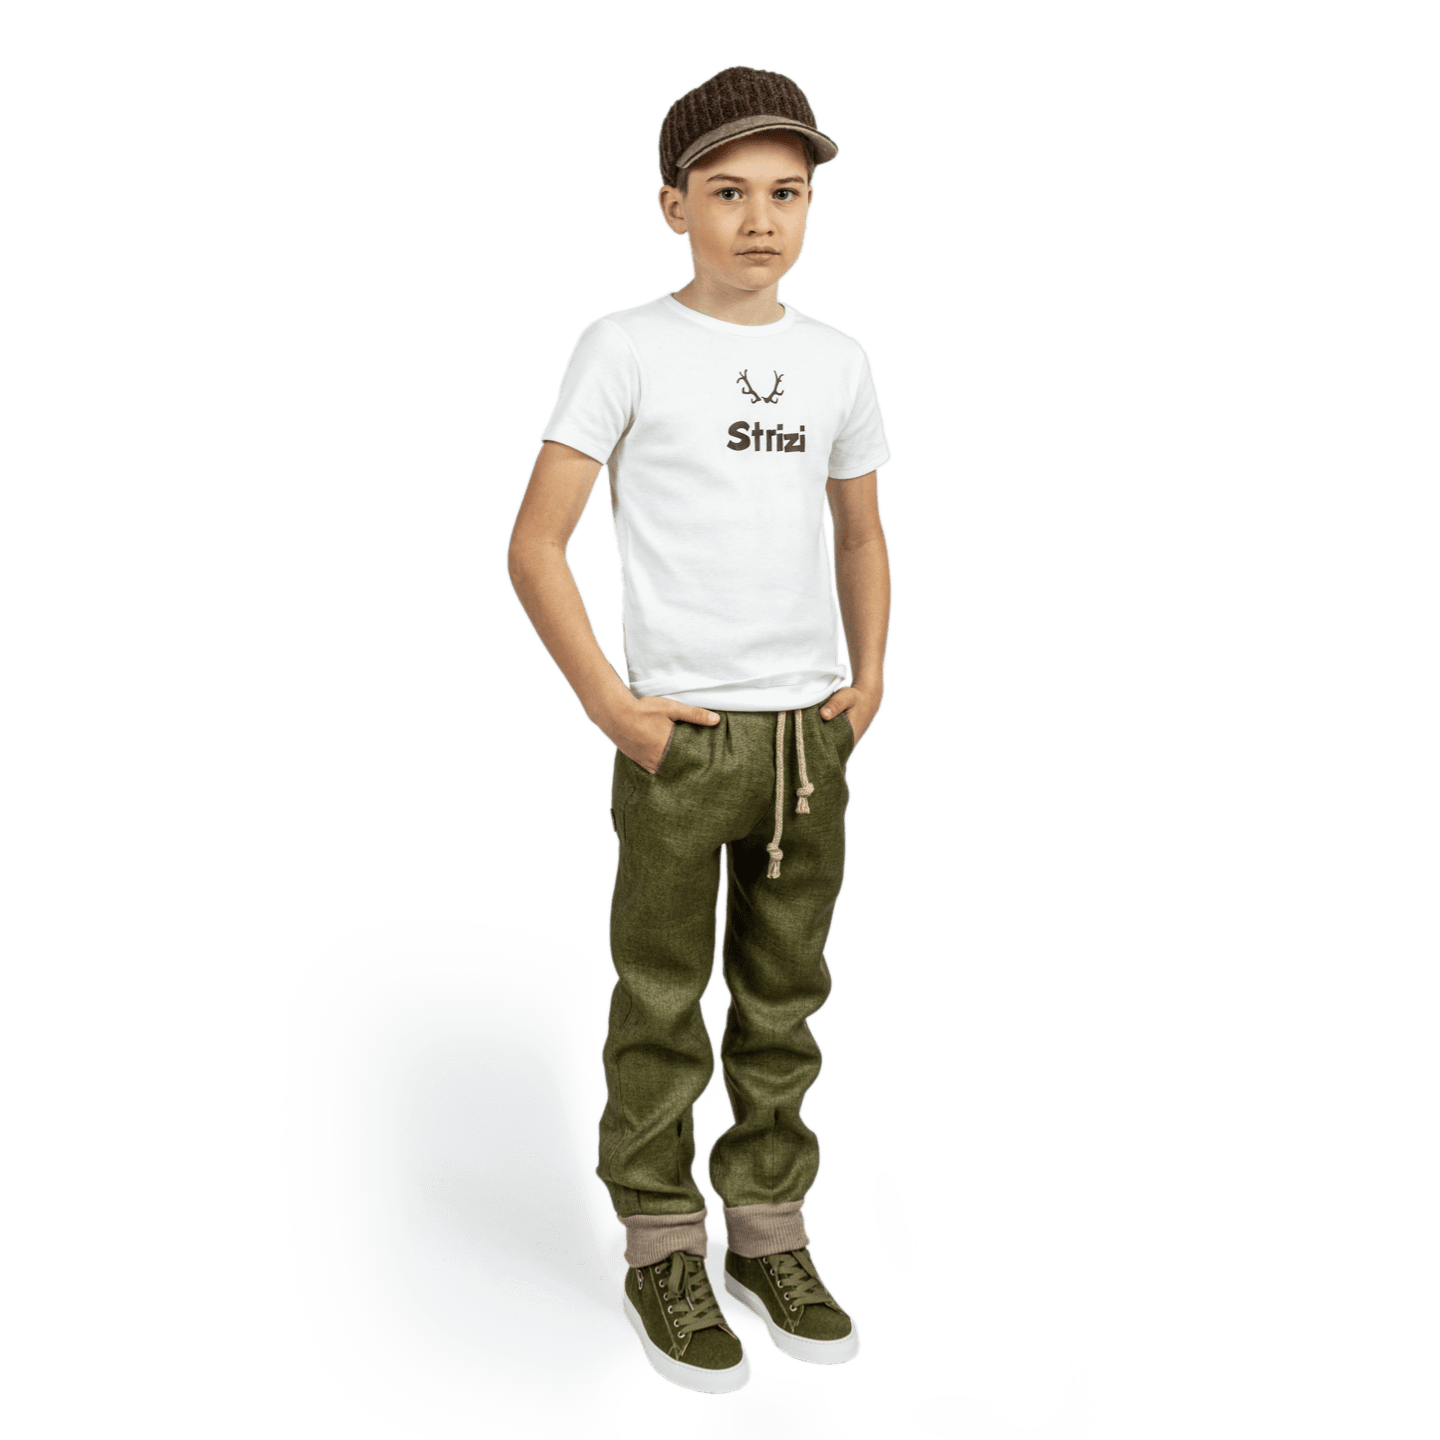 Strizi Kinder Striz Shirt weiss 1 - Strizi Children‘s relaxation pants linen